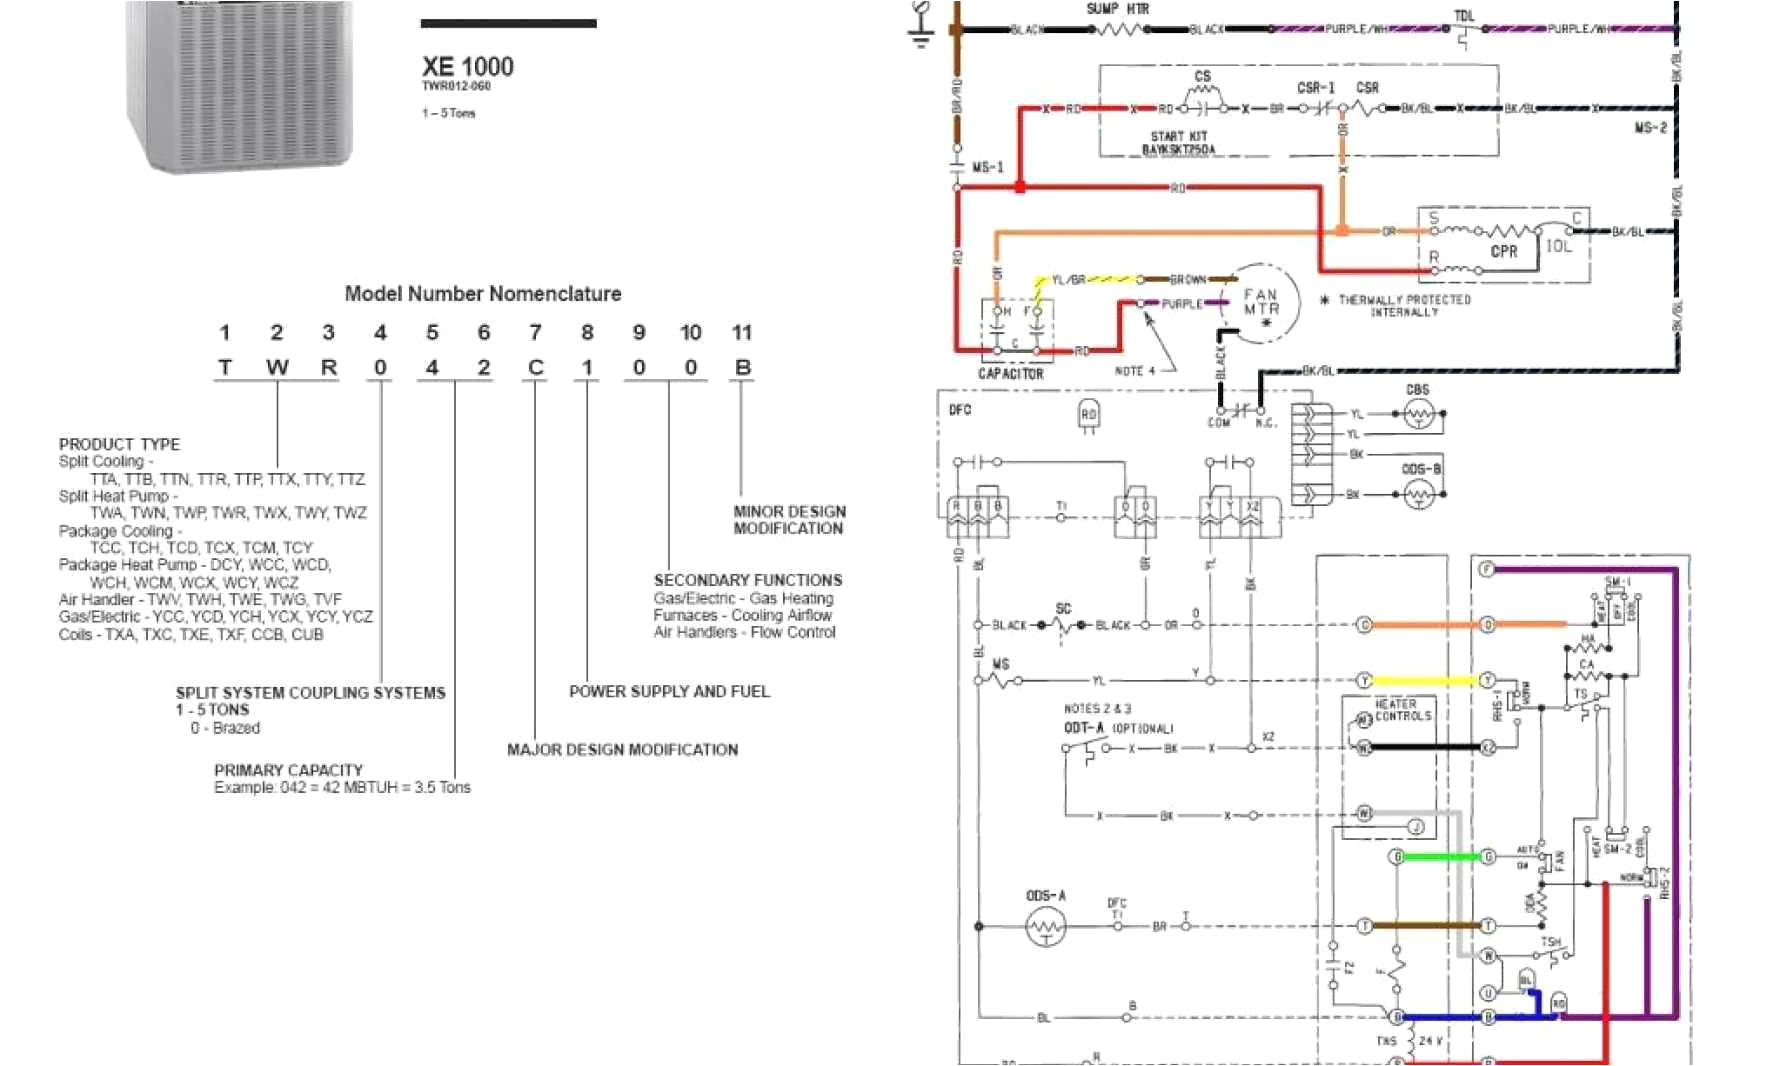 trane wiring schematics wiring diagrams trane wiring diagrams trane hvac system wiring diagram wiring diagram for